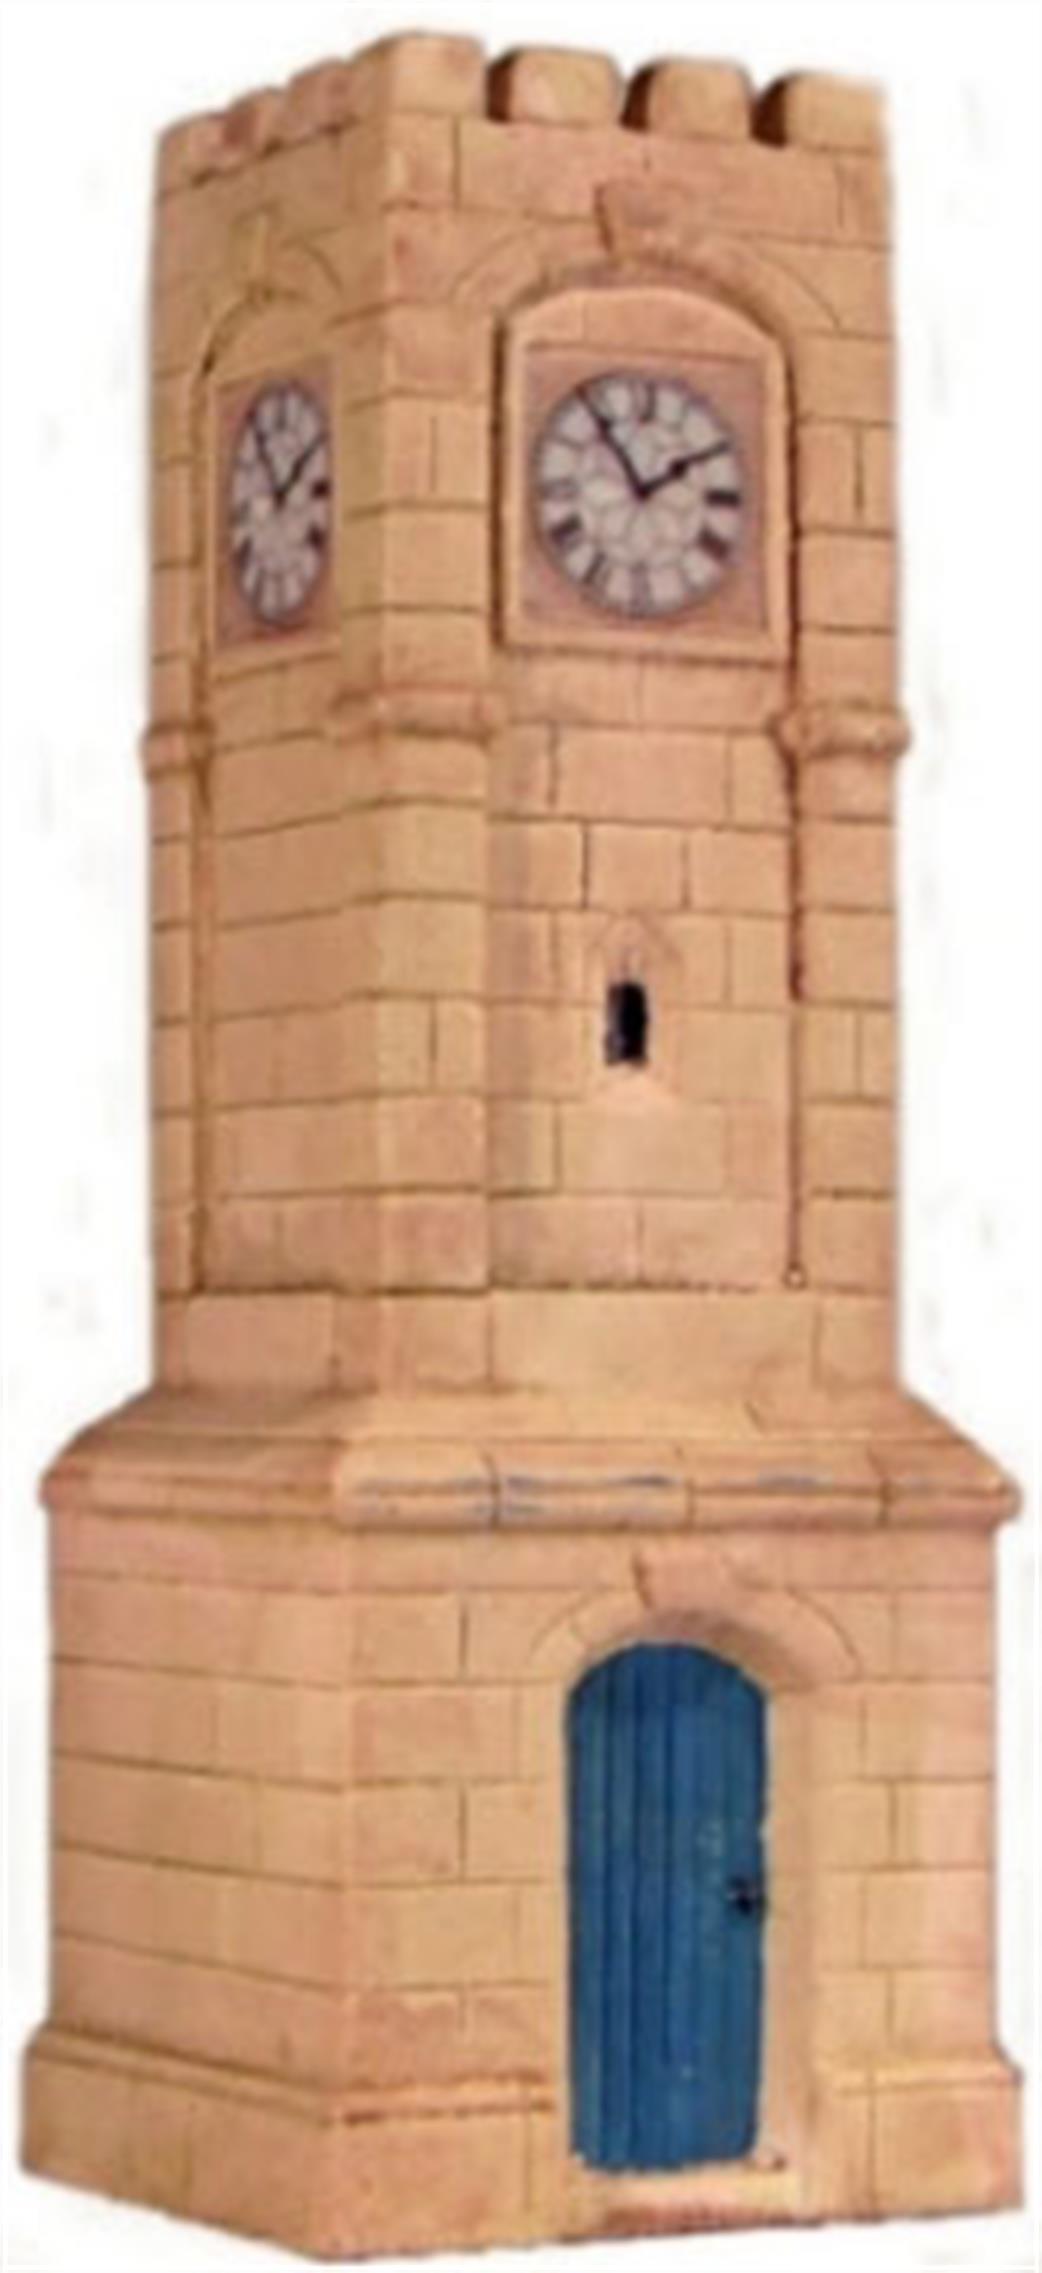 Harburn Hamlet OO SS362 The Clock Tower - dressed stone